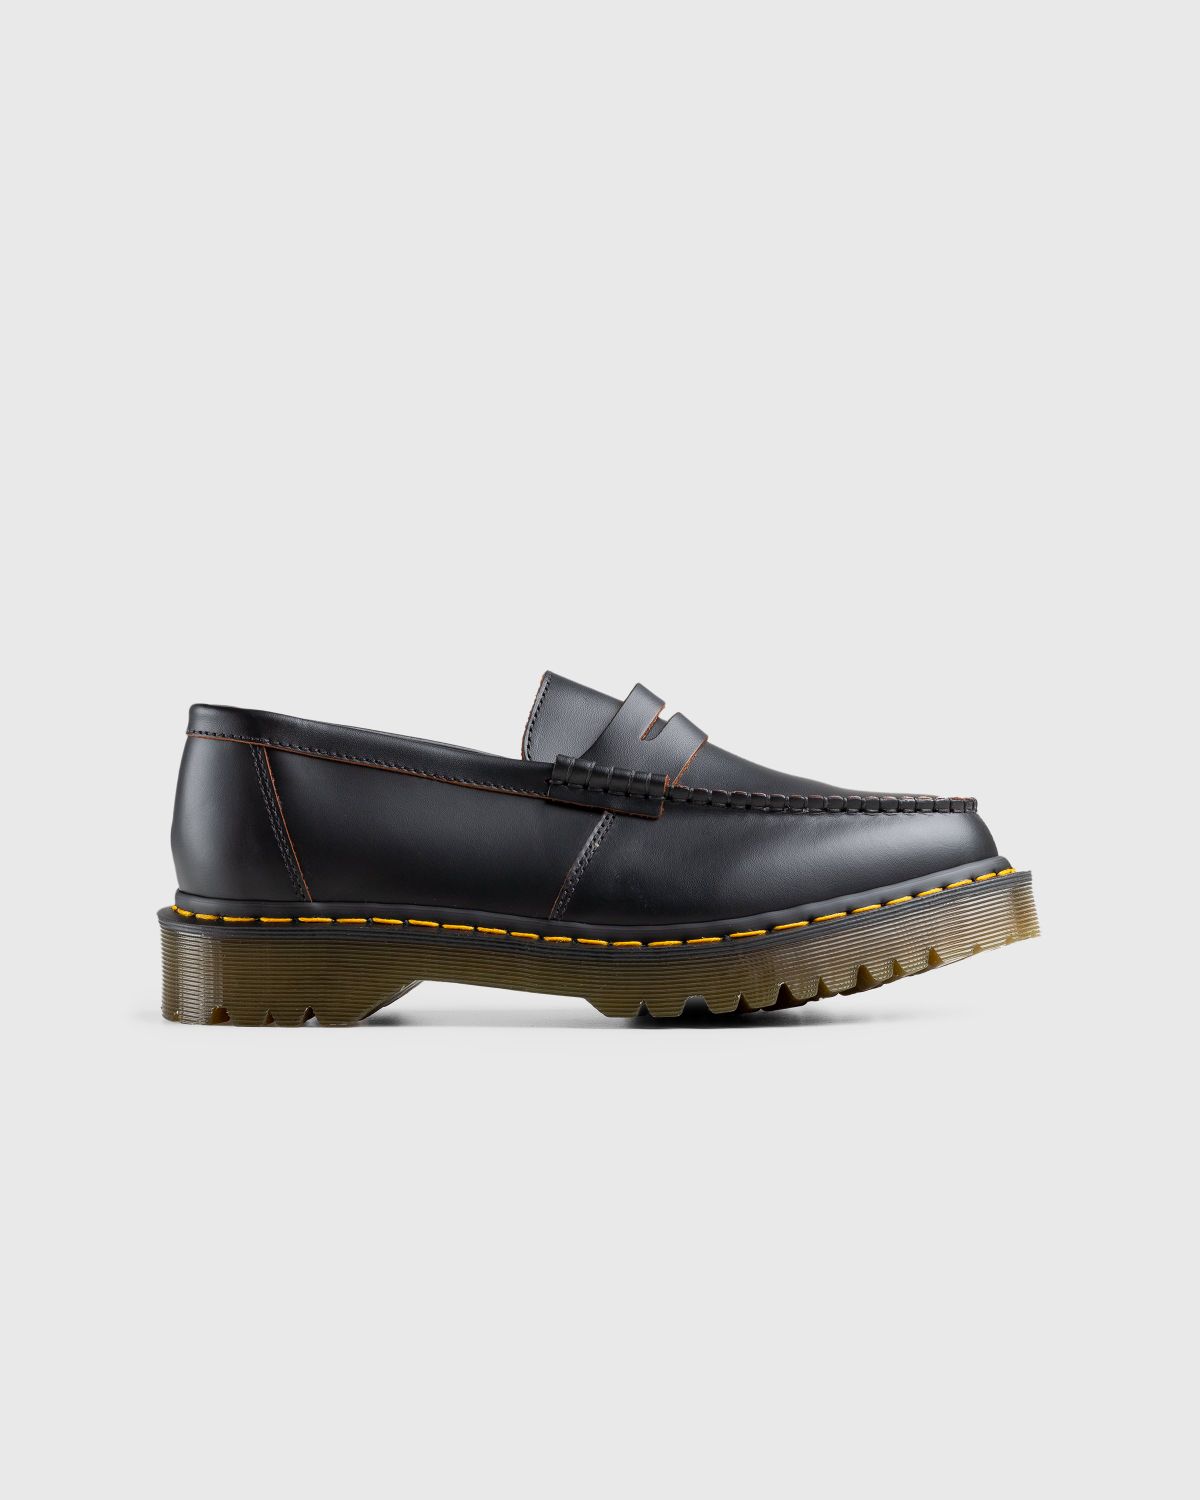 Dr. Martens – Penton Bex Quilon Leather Loafers Black - Loafers - Black - Image 1